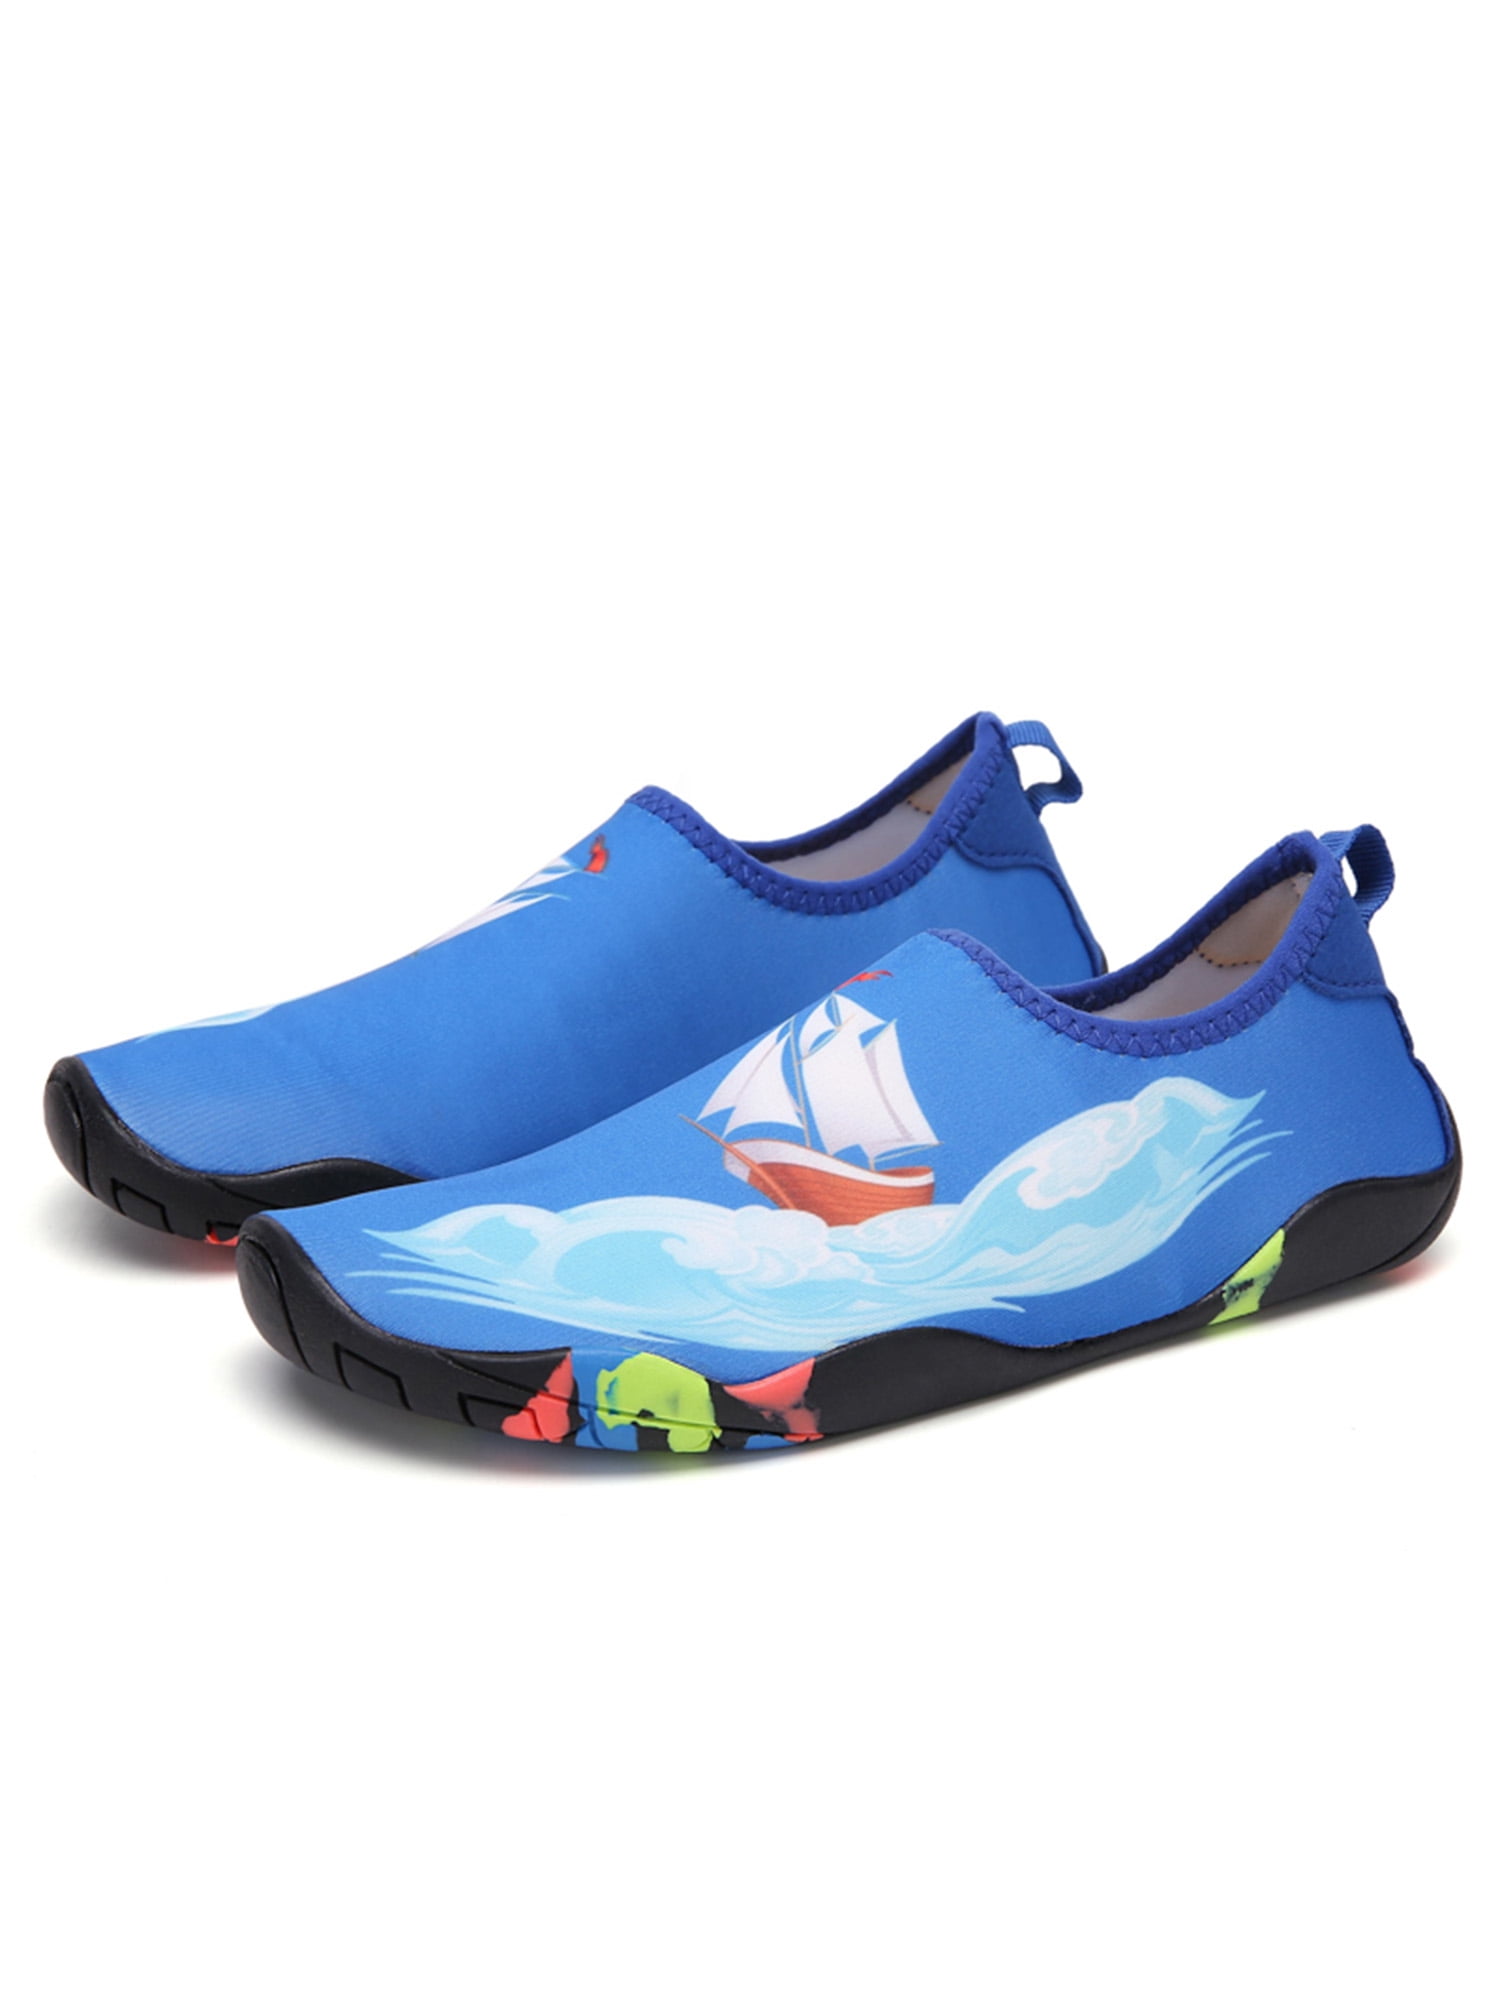 Baby Kid Summer Beach Surfing Swim Aqua Socks Water Shoes Scuba Diving Size6 7 8 